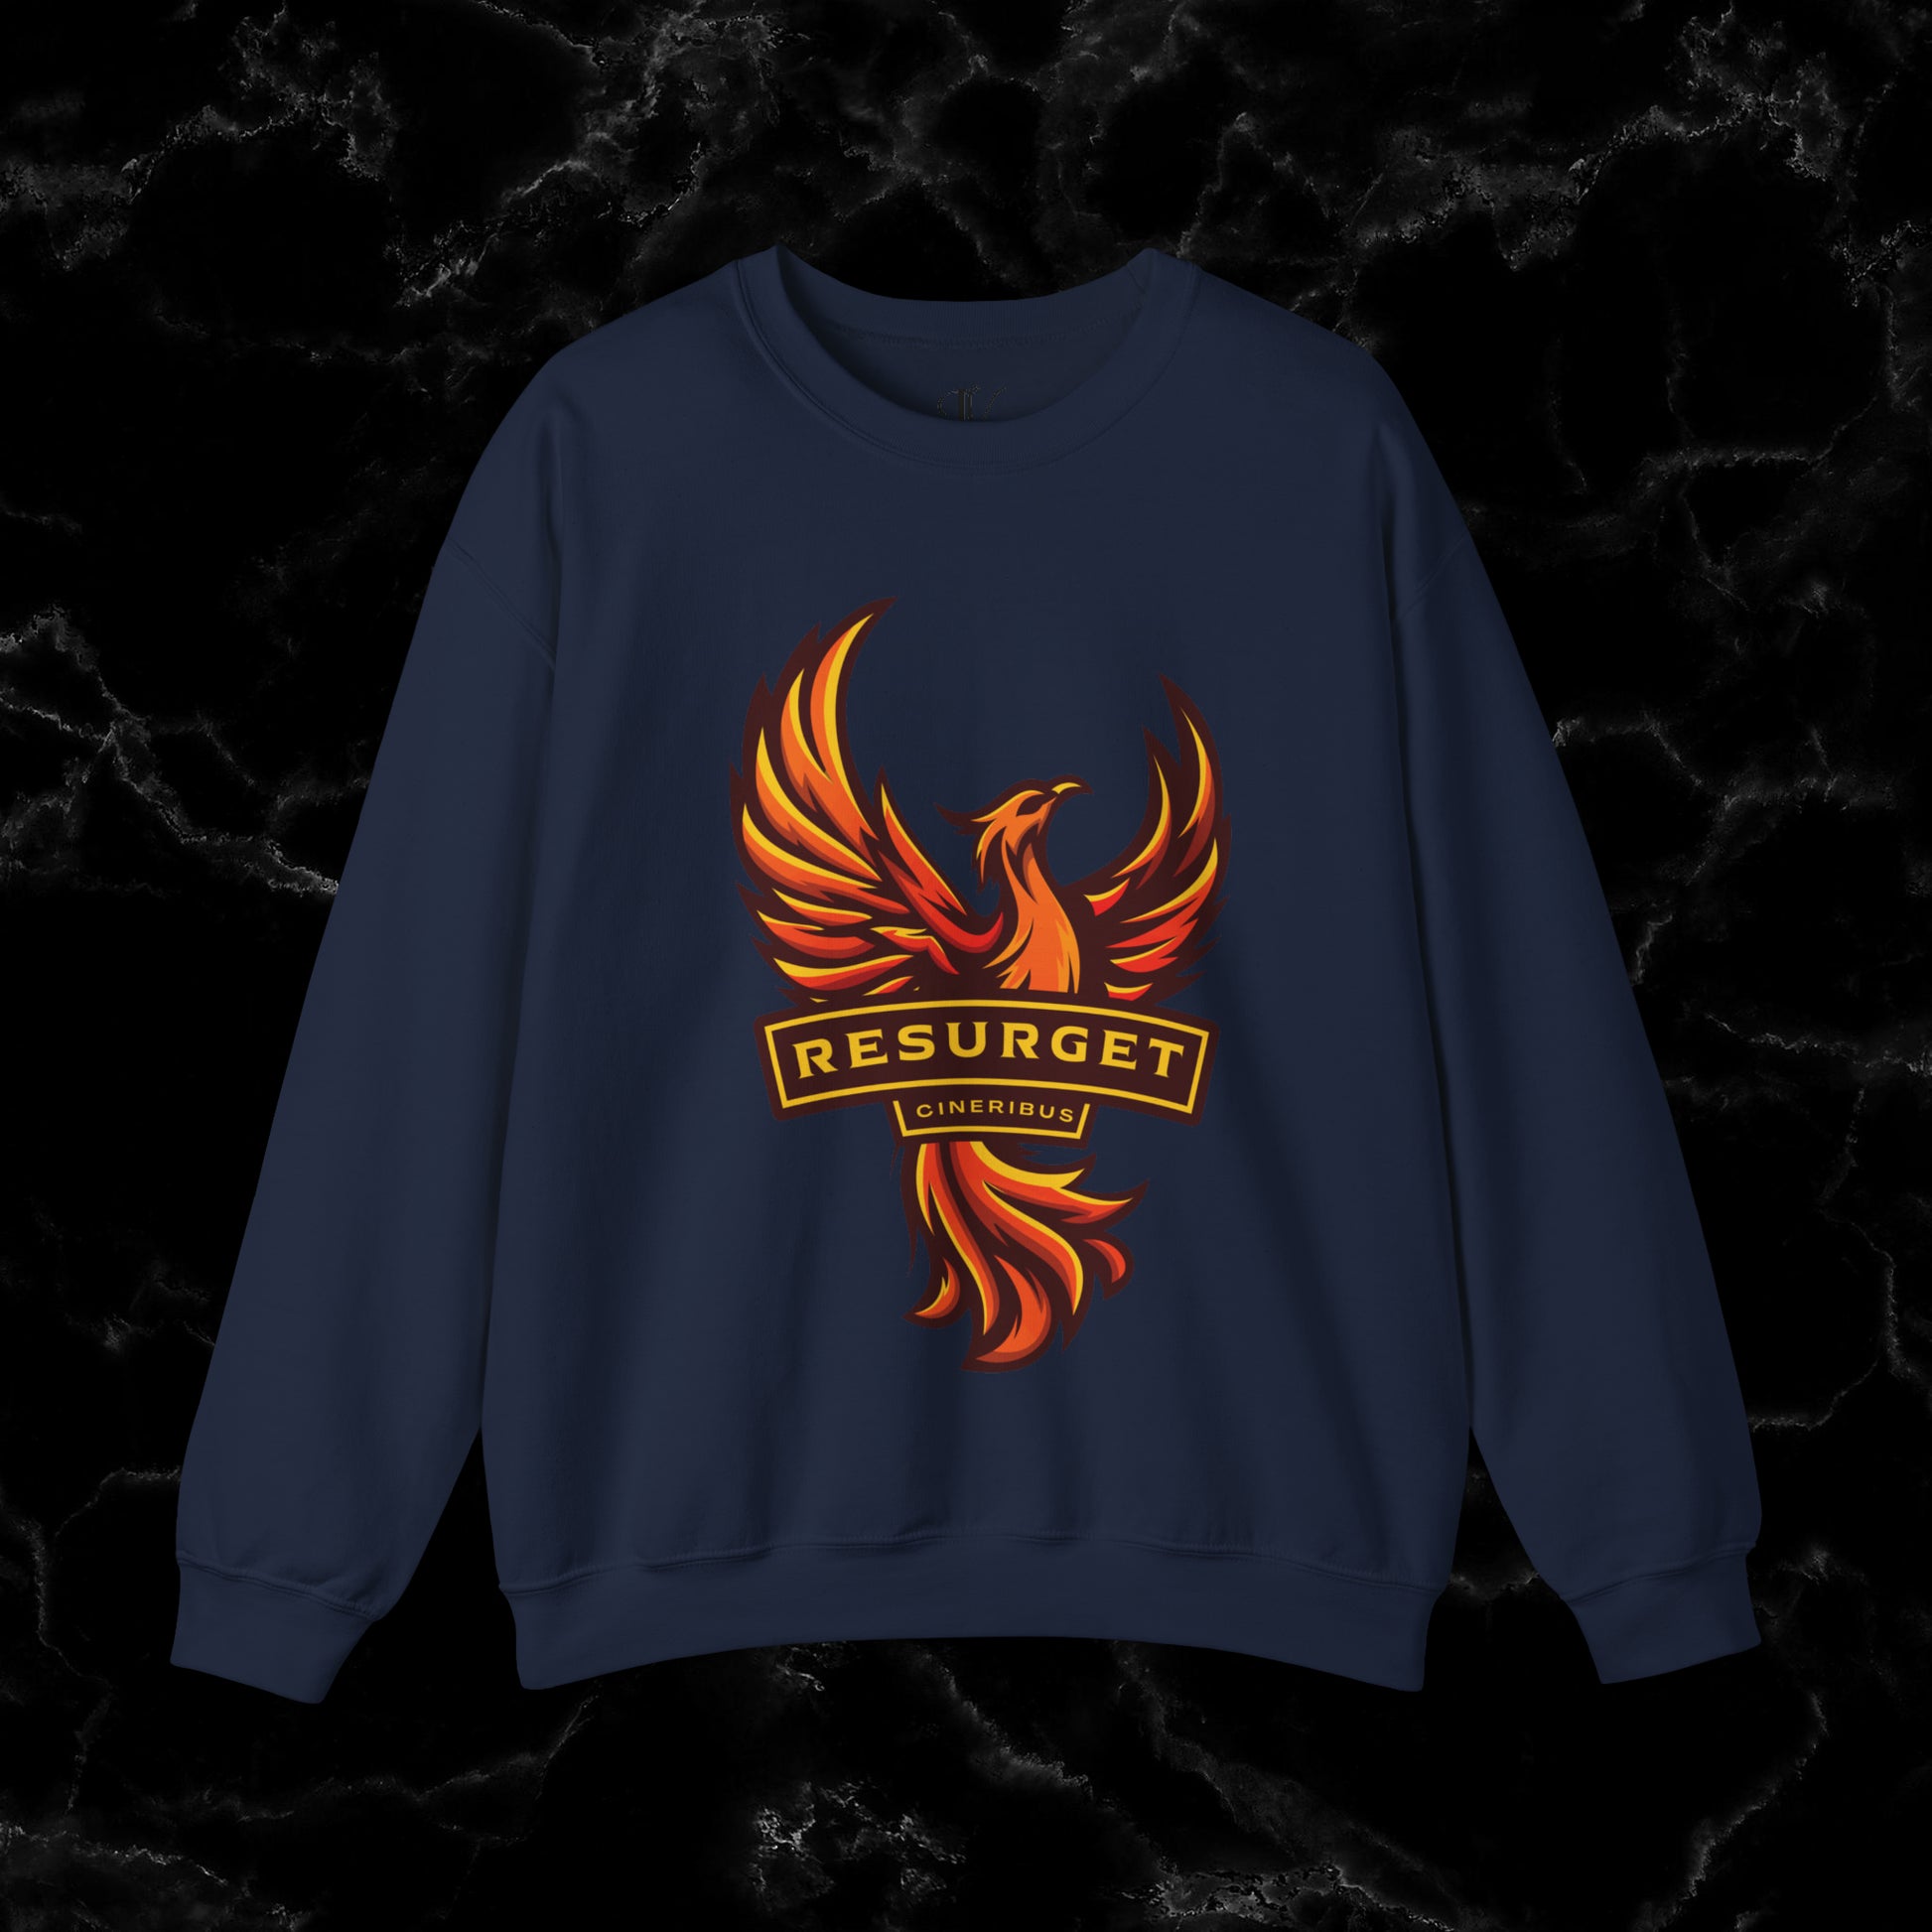 Resurget Cineribus Unisex Crewneck Sweatshirt - Latin Inspirational Gifts for Sports Football Fans Sweatshirt S Navy 